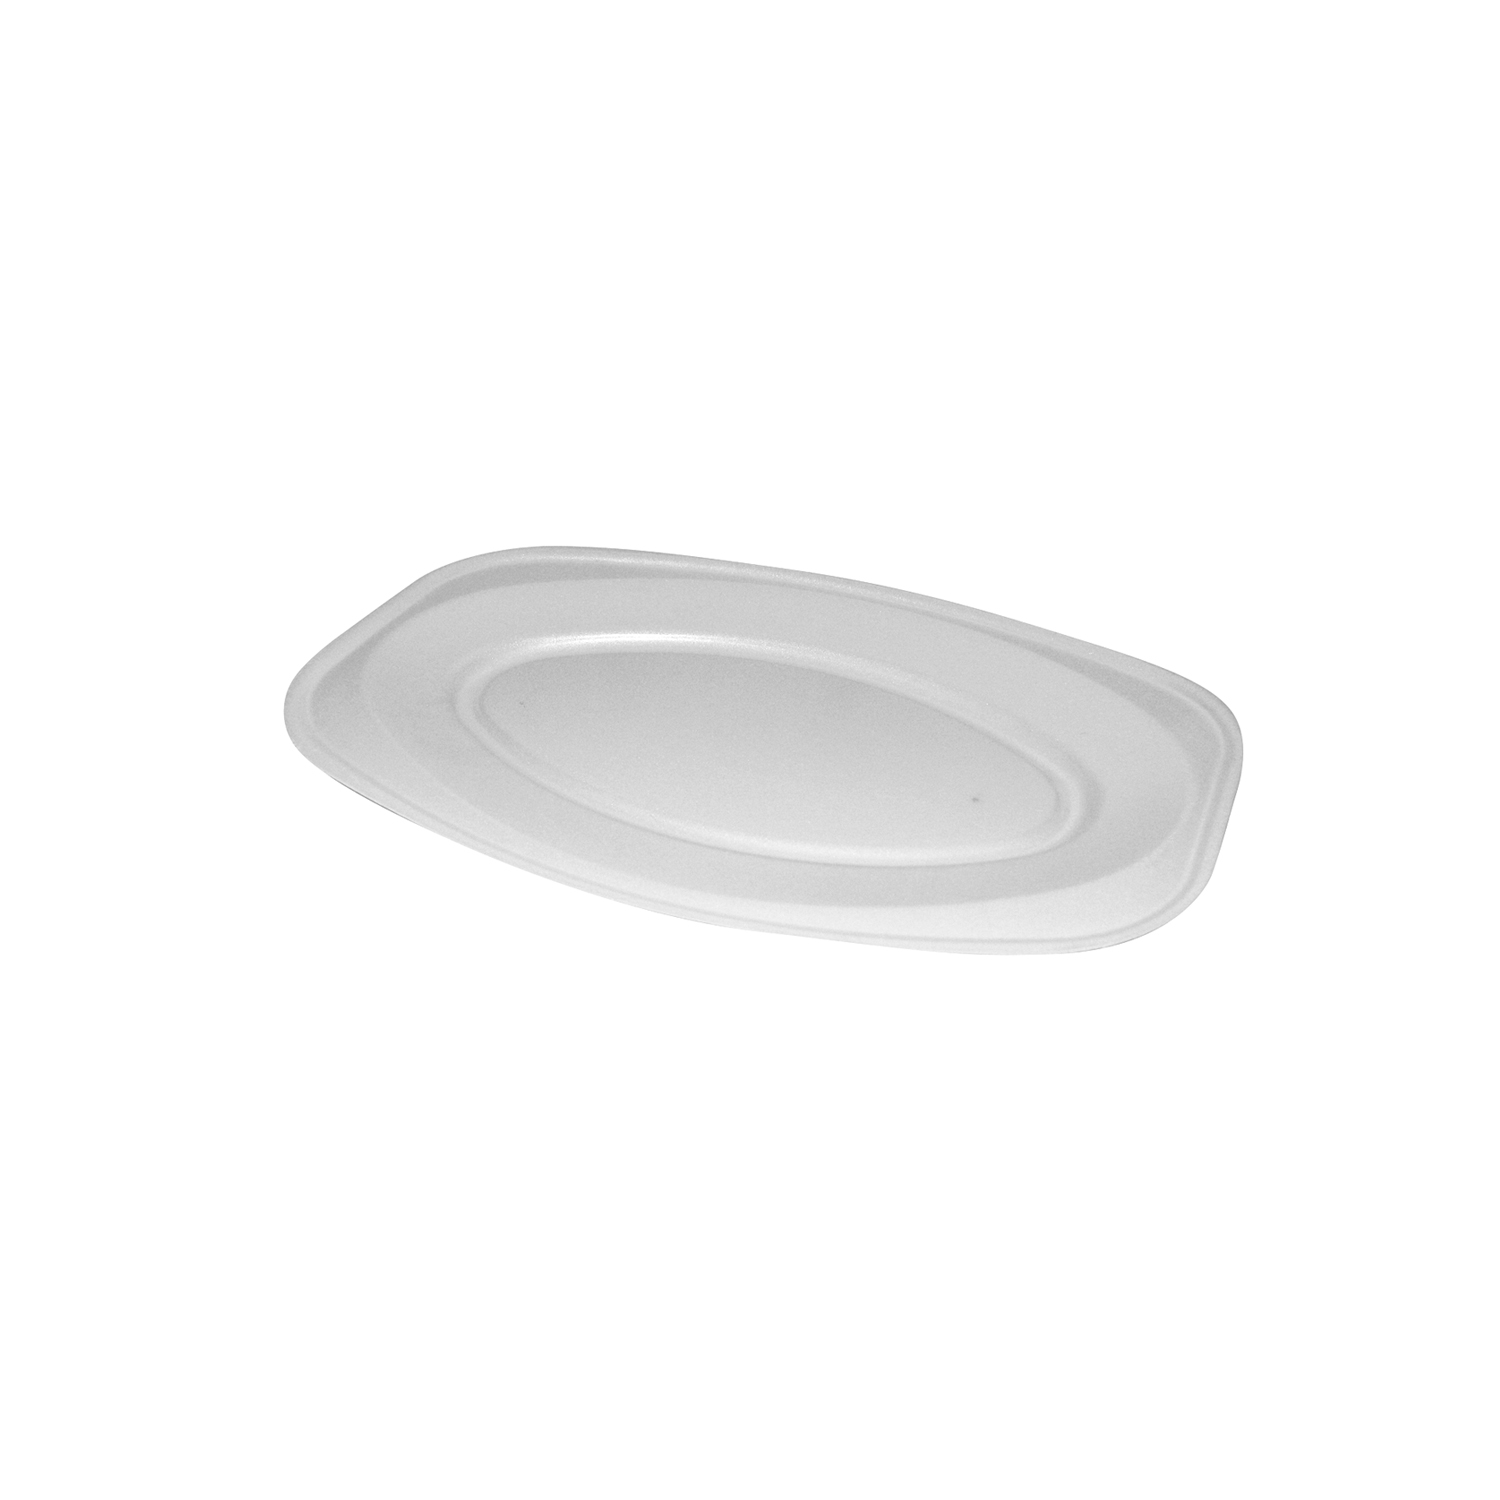 Party-Platte (XPS) oval weiß 35 x 24,7 cm - 10 Stück